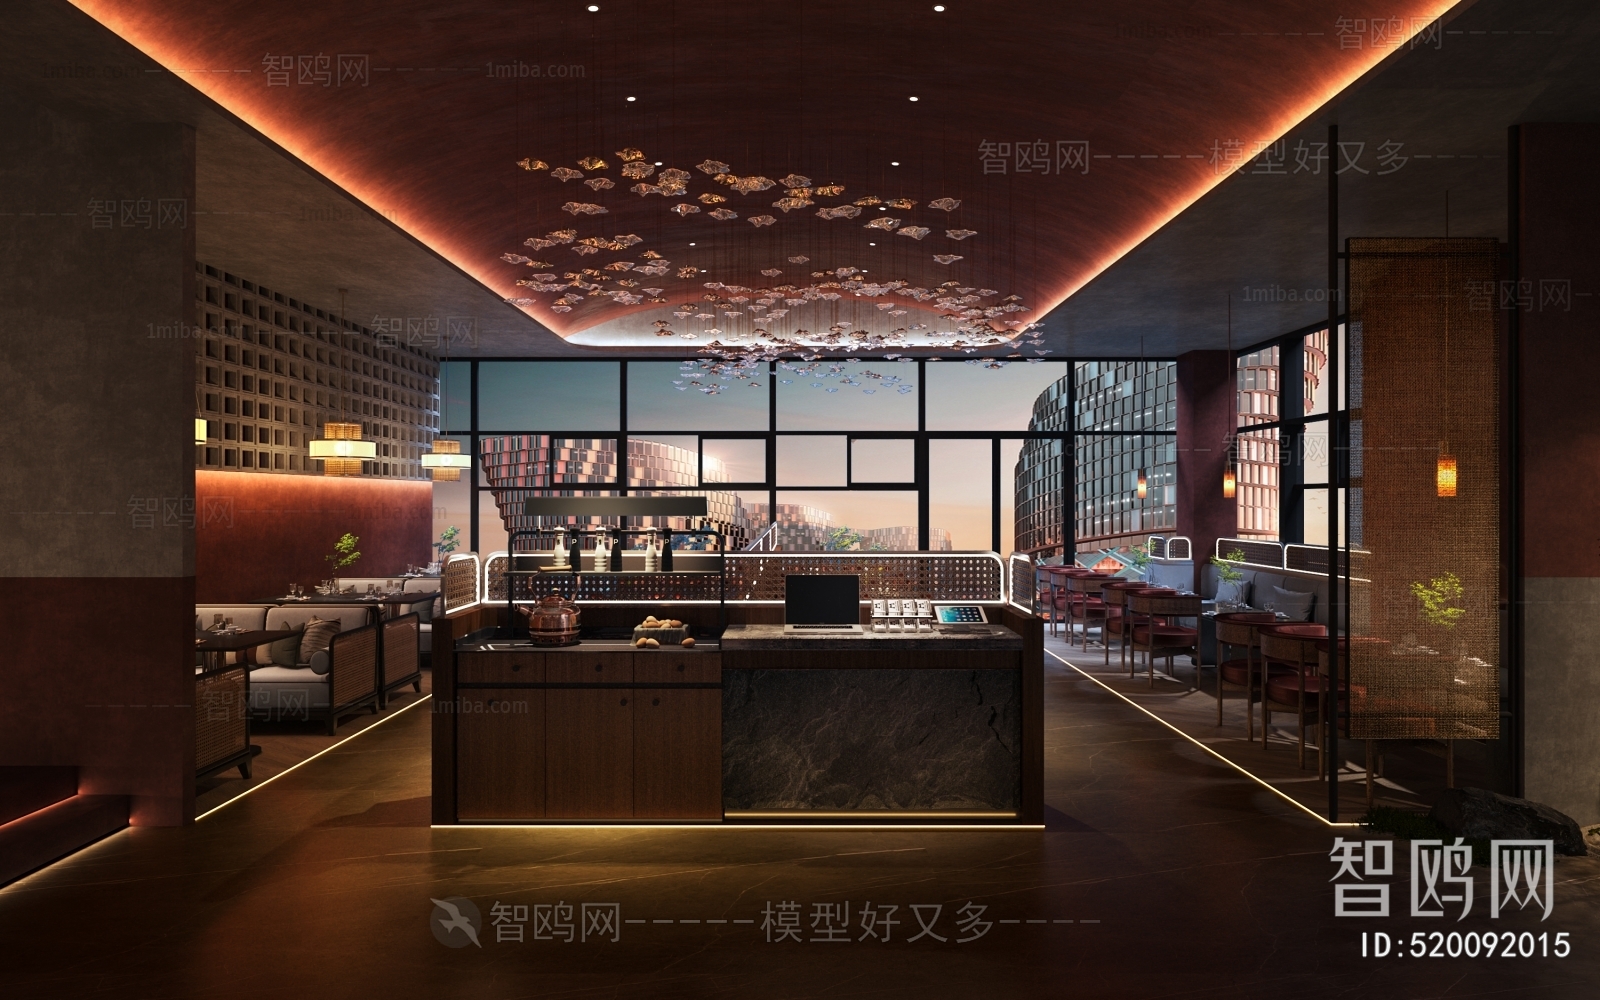 Modern New Chinese Style Restaurant